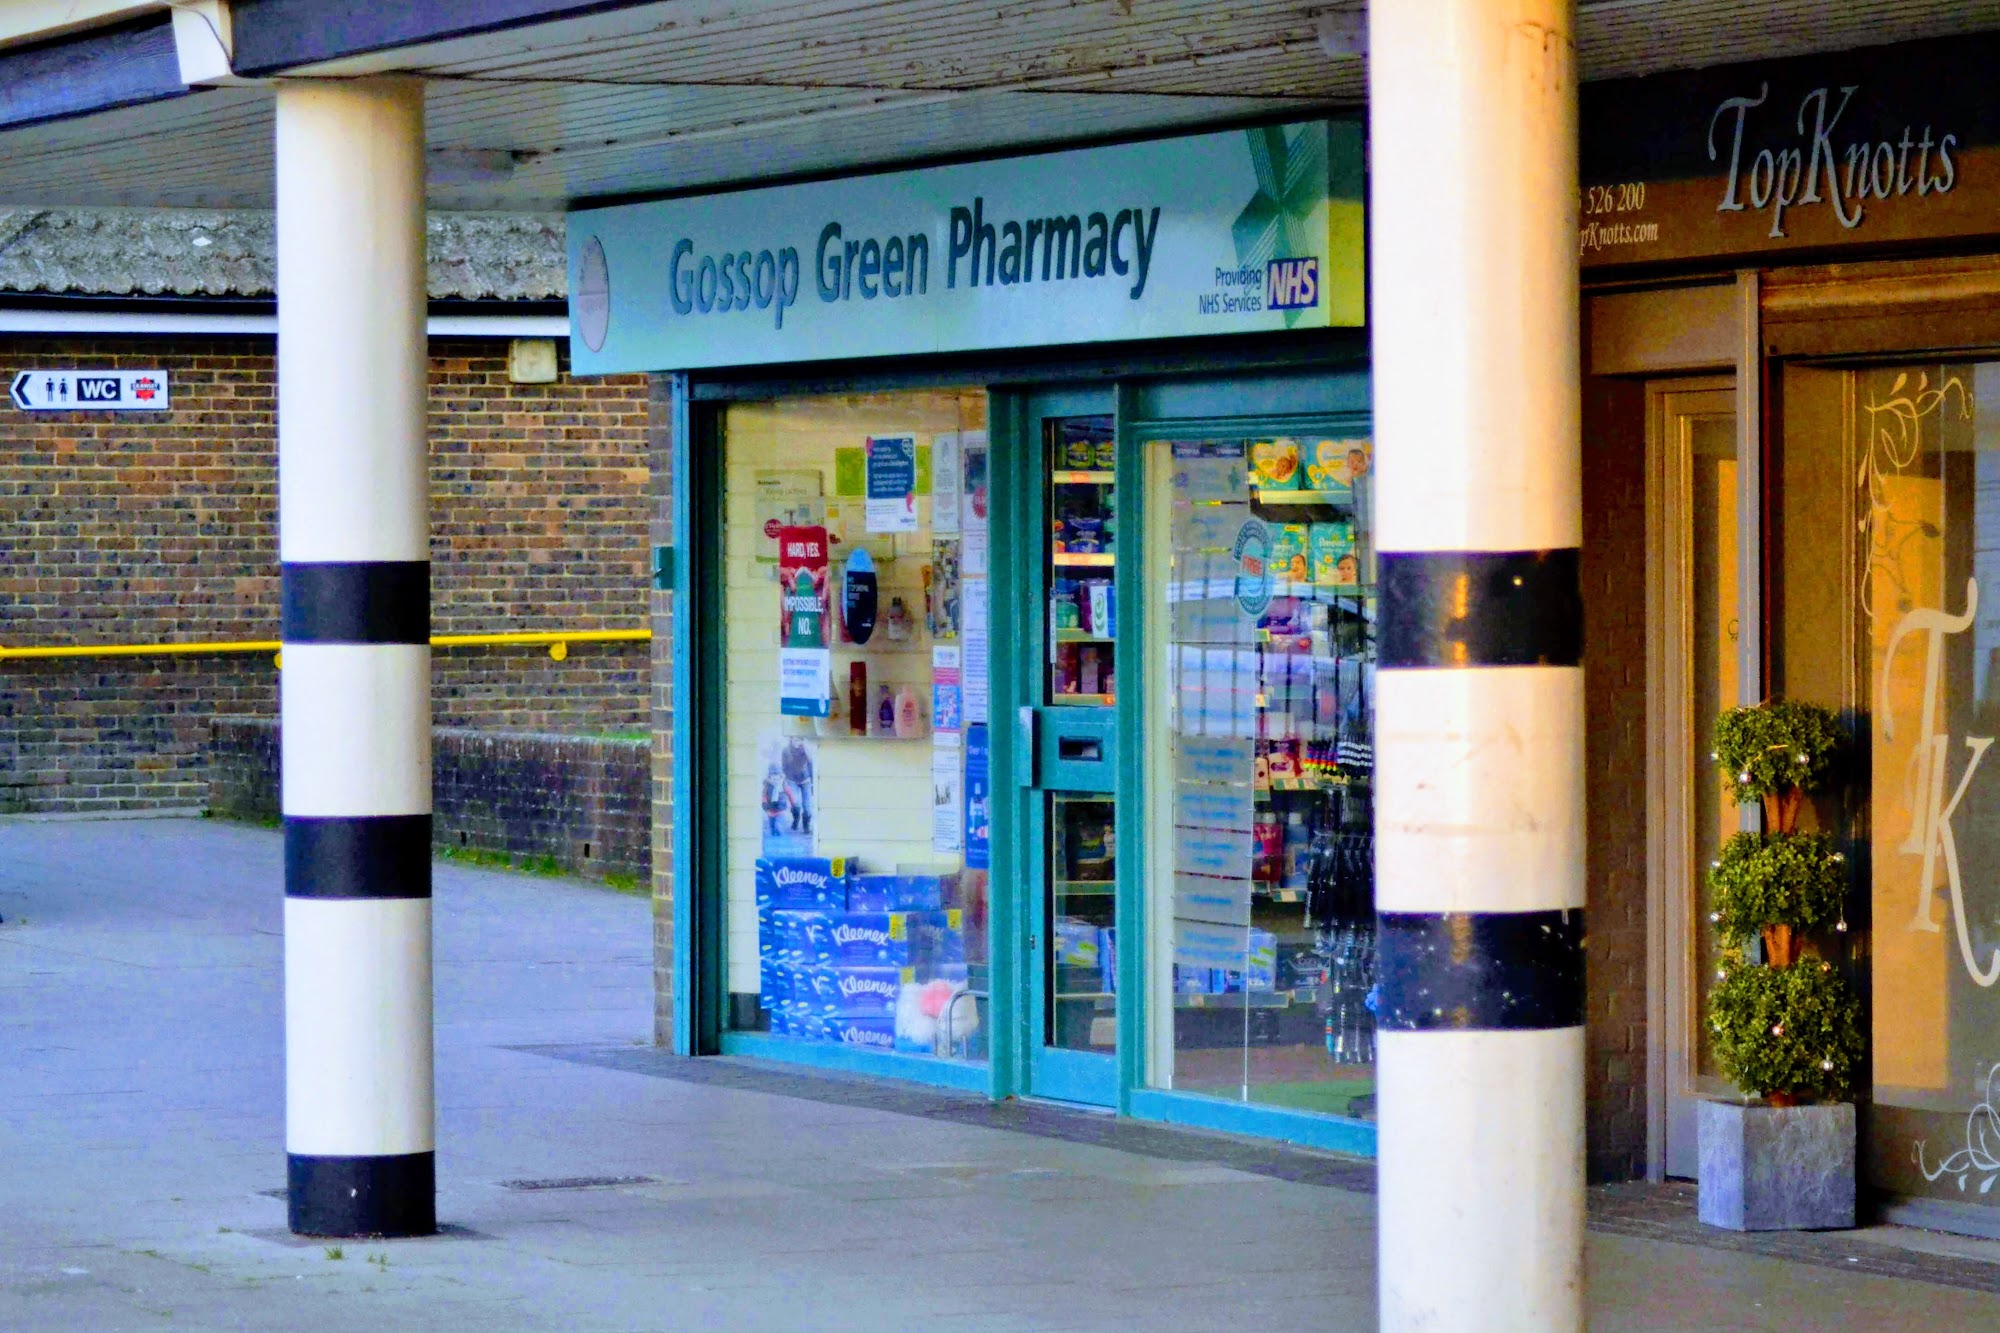 Gossops Green Pharmacy